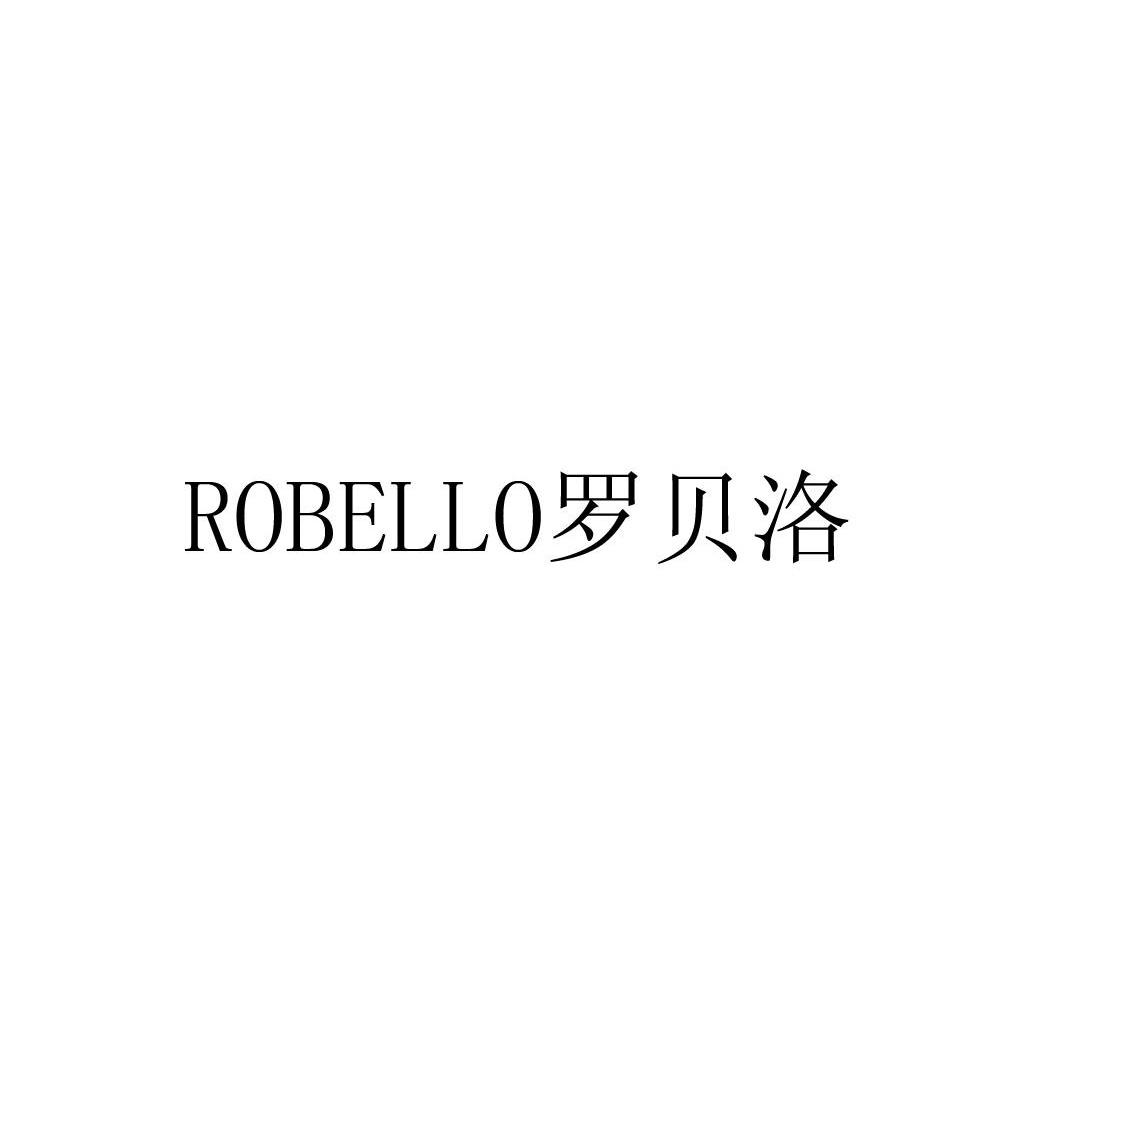 罗贝洛 em>robello/em>